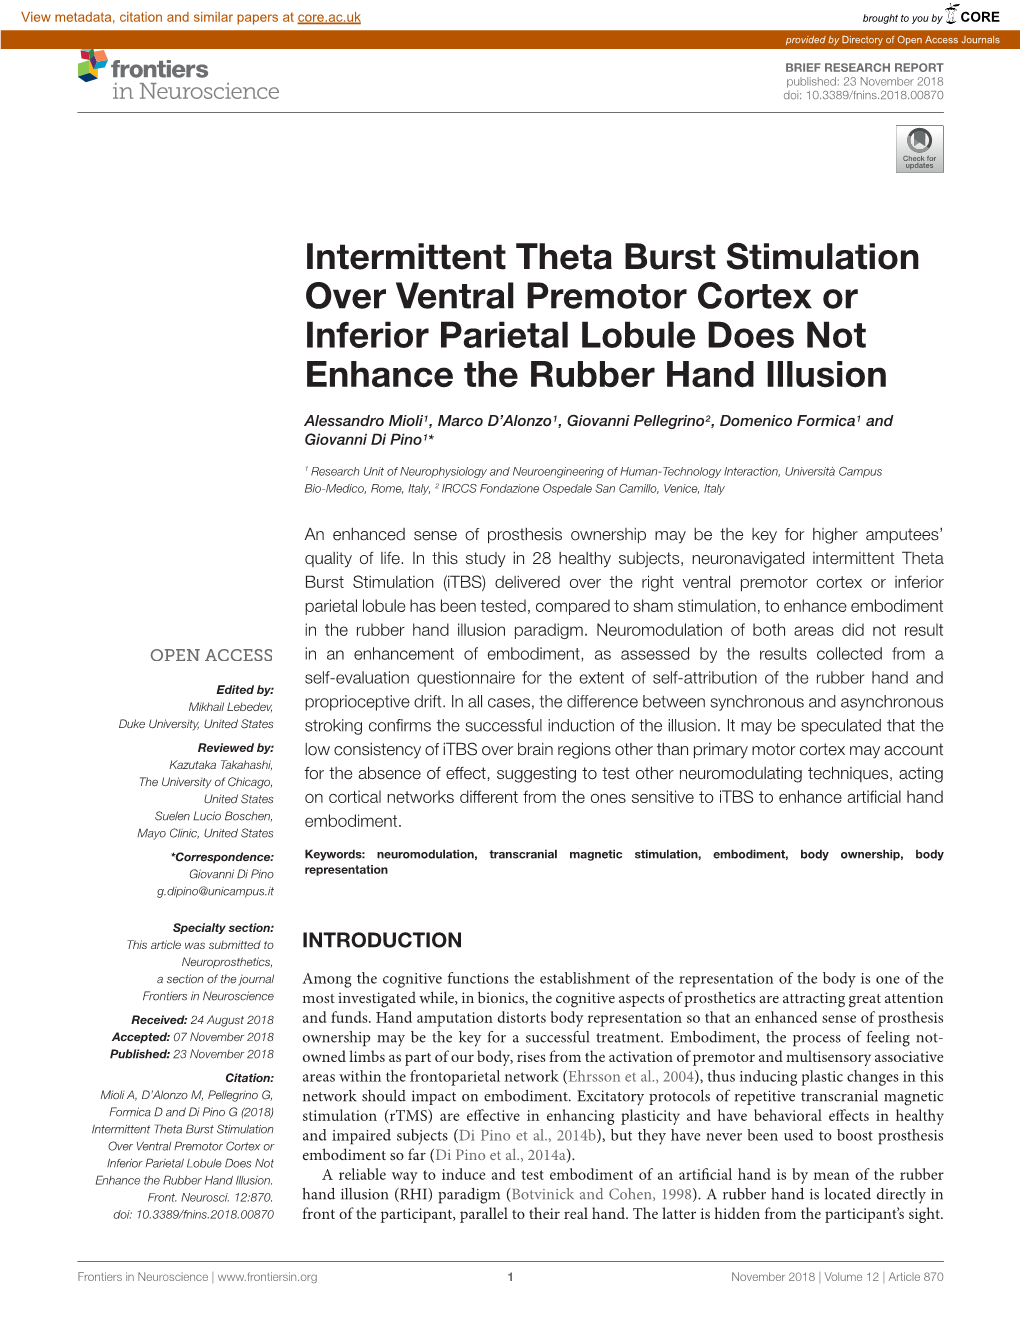 Intermittent Theta Burst Stimulation Over Ventral Premotor Cortex Or Inferior Parietal Lobule Does Not Enhance the Rubber Hand Illusion